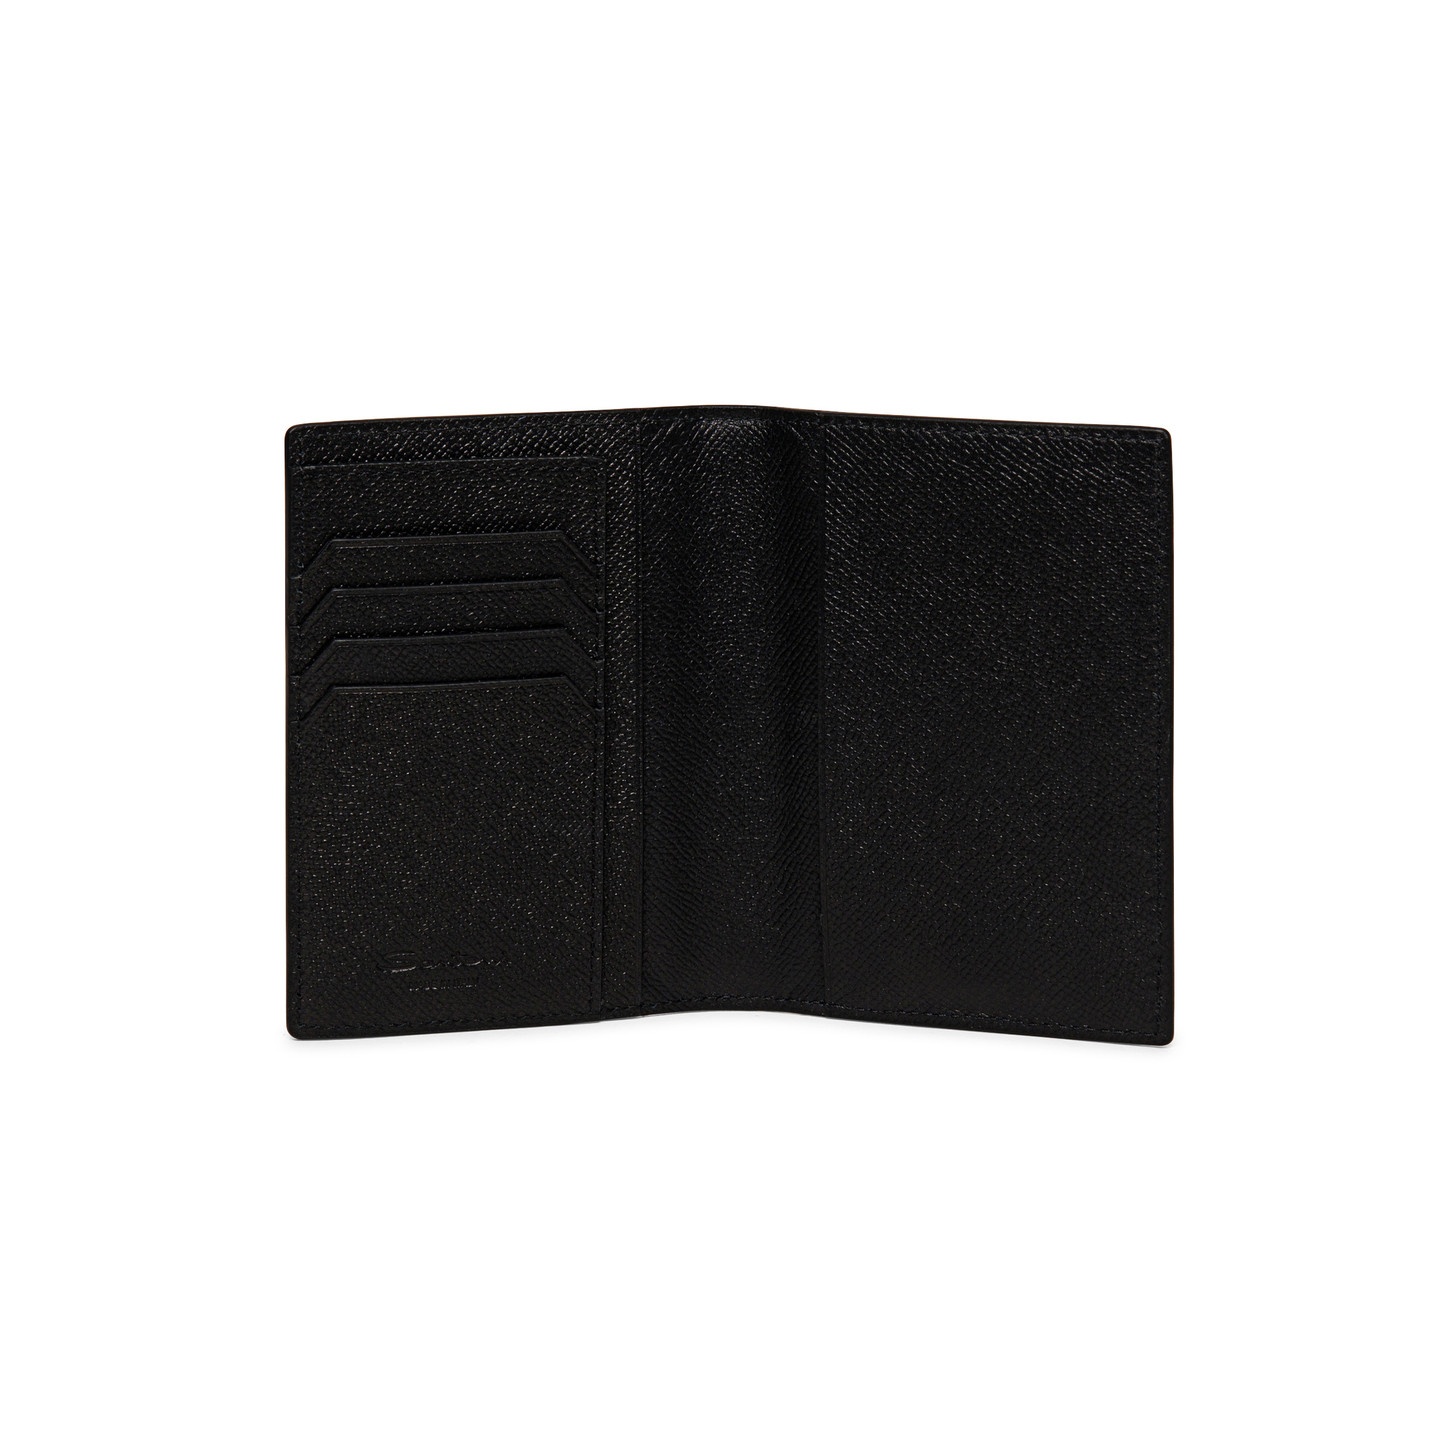 Black saffiano leather passport case - 3